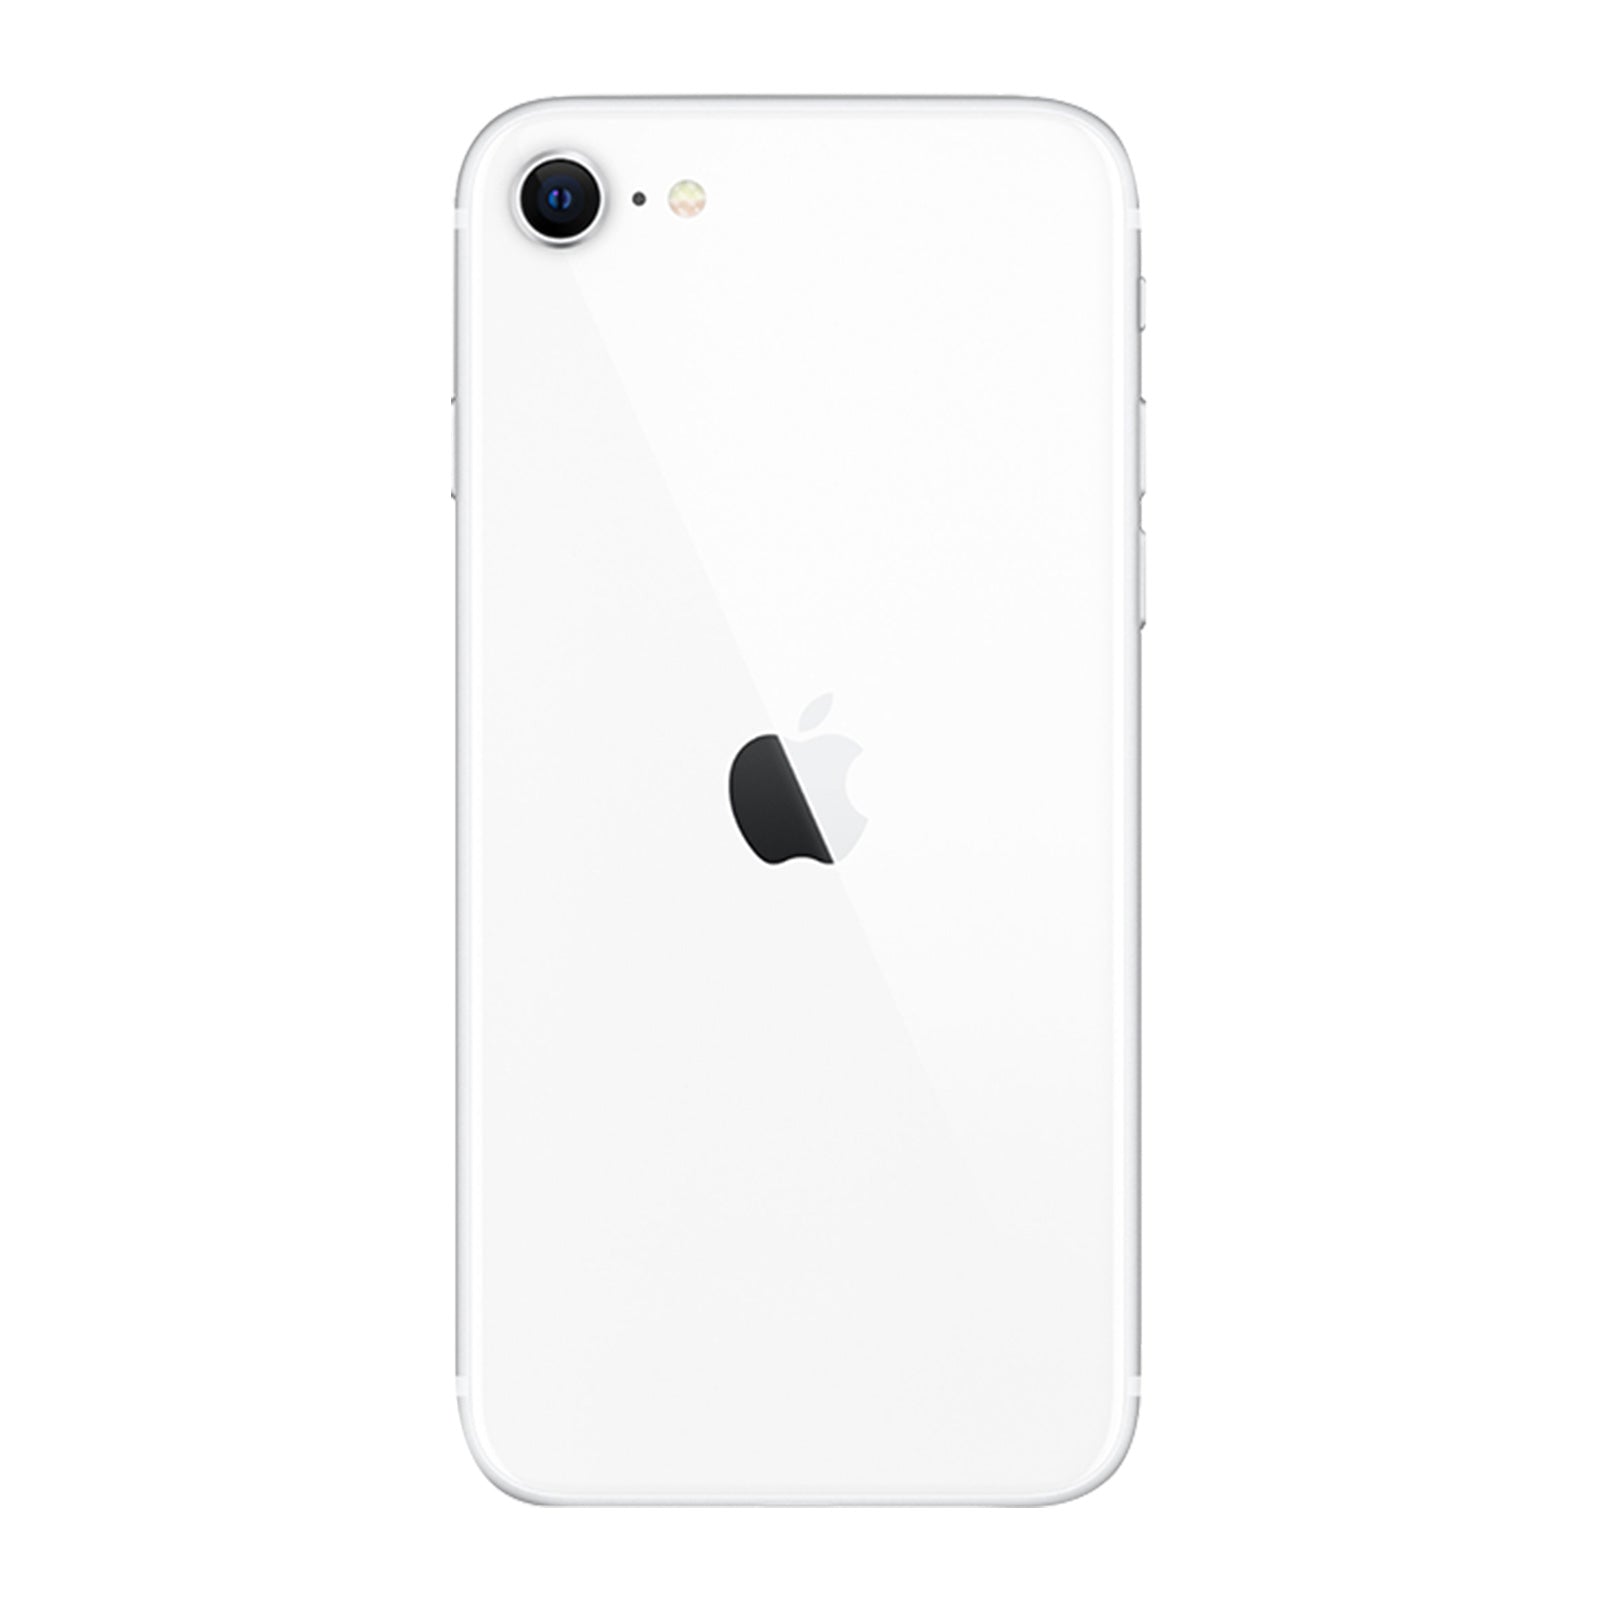 Apple iPhone SE 2nd Gen 128GB White Pristine AT&T